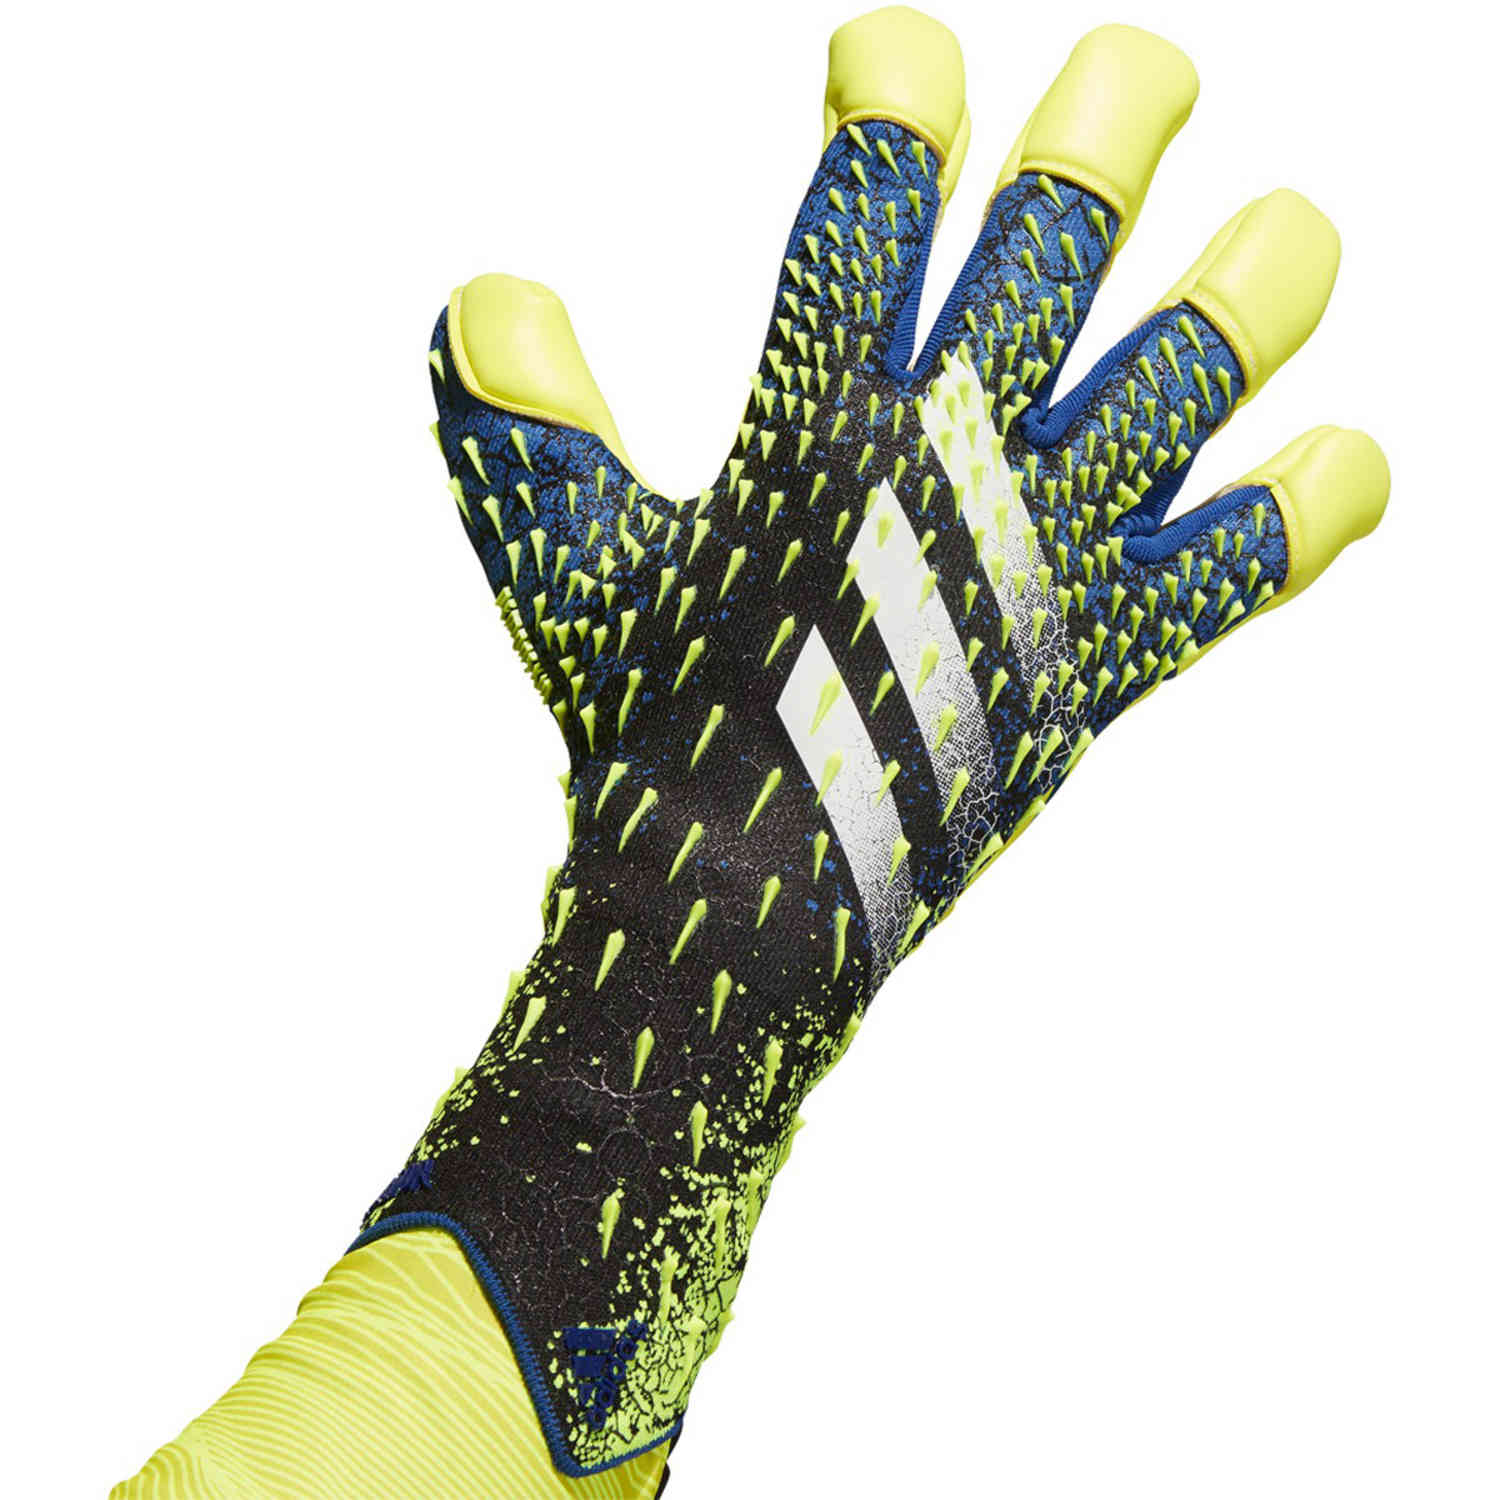 Adidas Predator Gloves Pro Goalkeeper Royal/Blue / 8